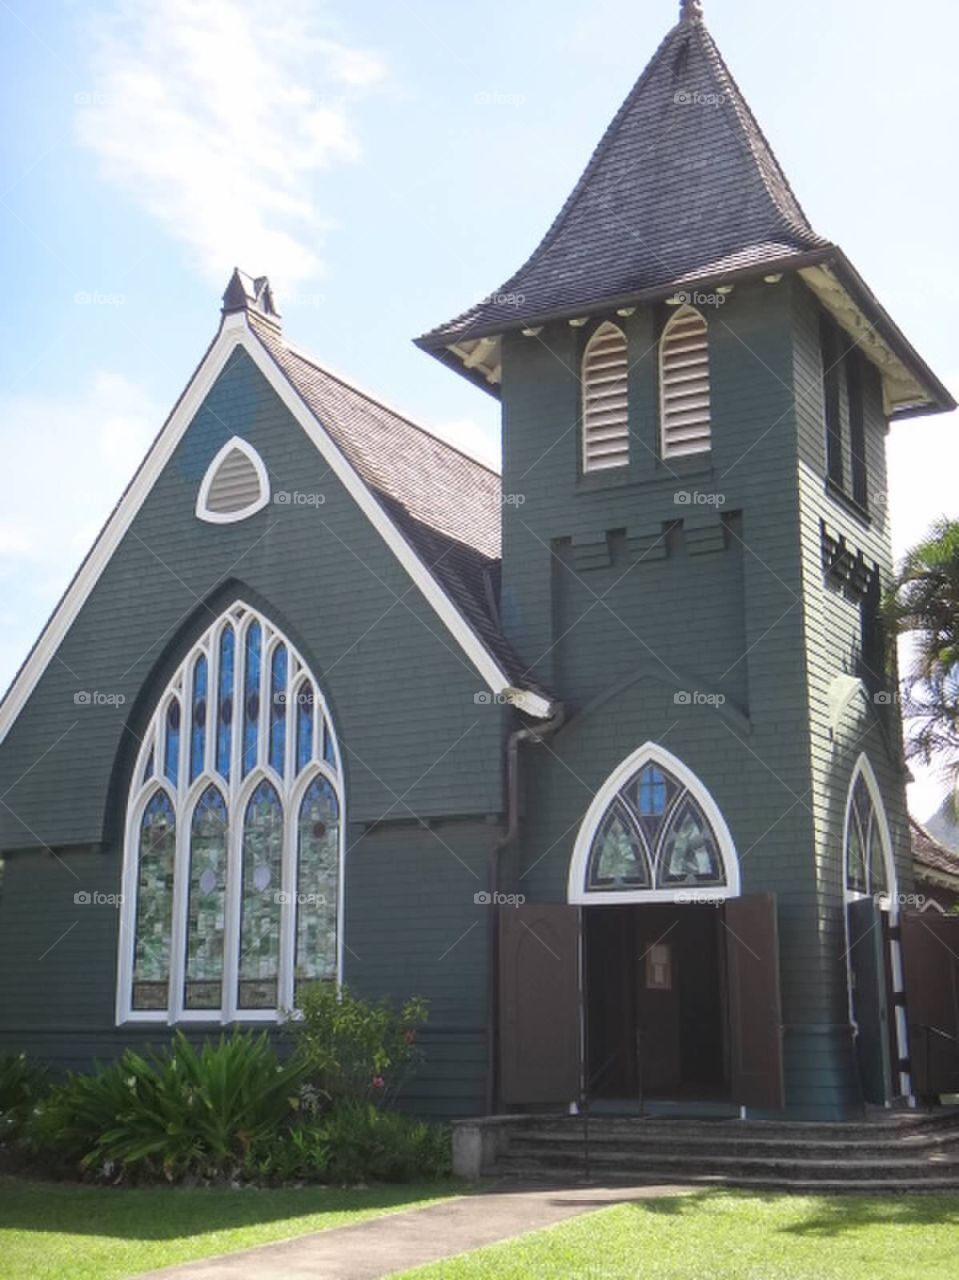 Hanalei church